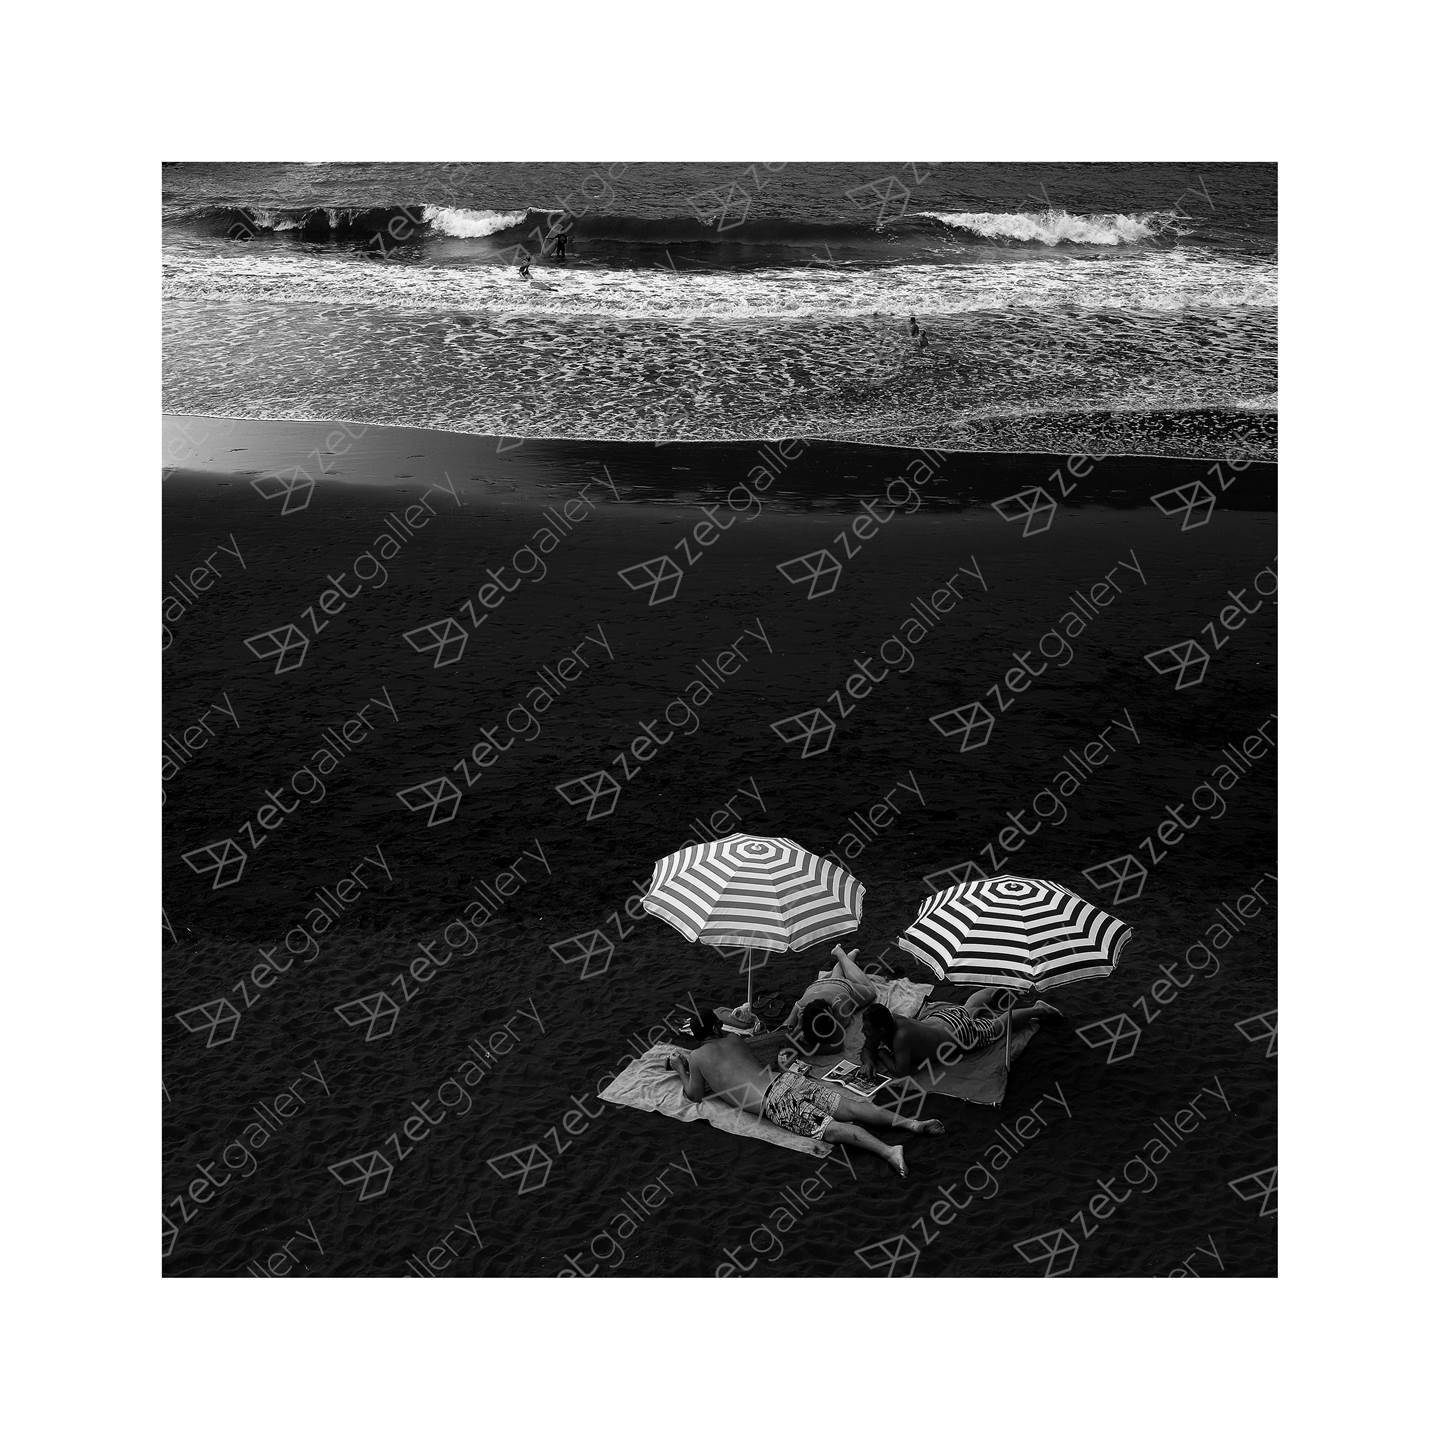 Sunbathers, original B&W Digital Photography by Filipe Bianchi